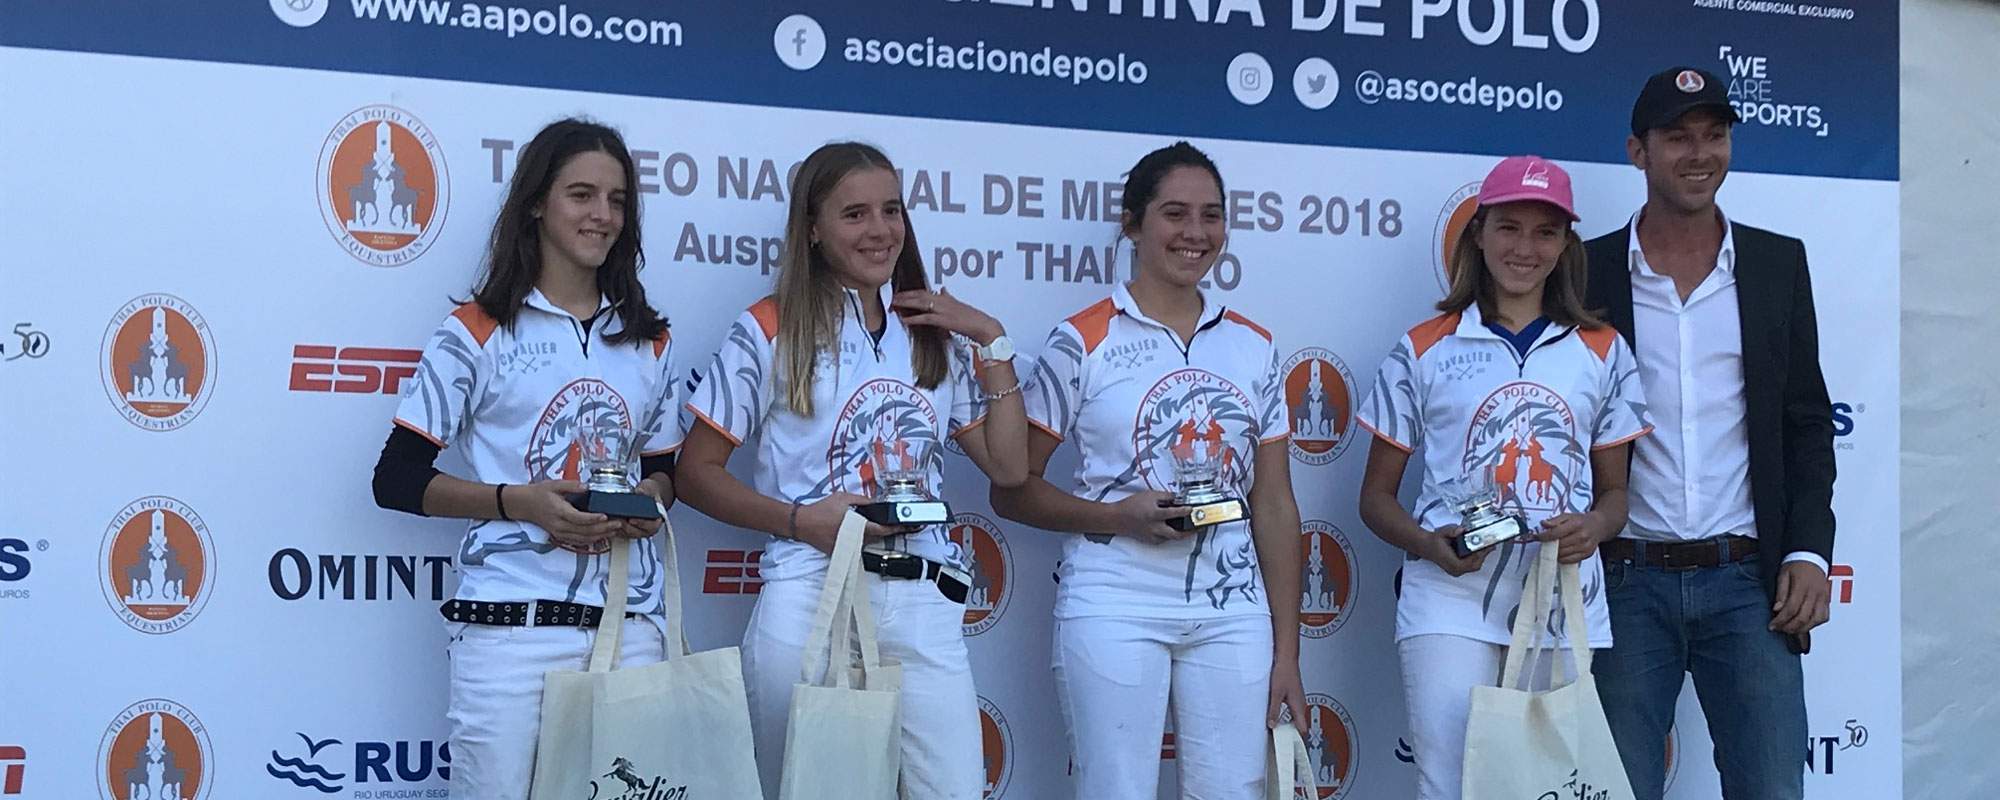 LA SOFIA QUATRO VIENTOS ganador del AAP National Youth Championship 2018 - Category Juvenile Female